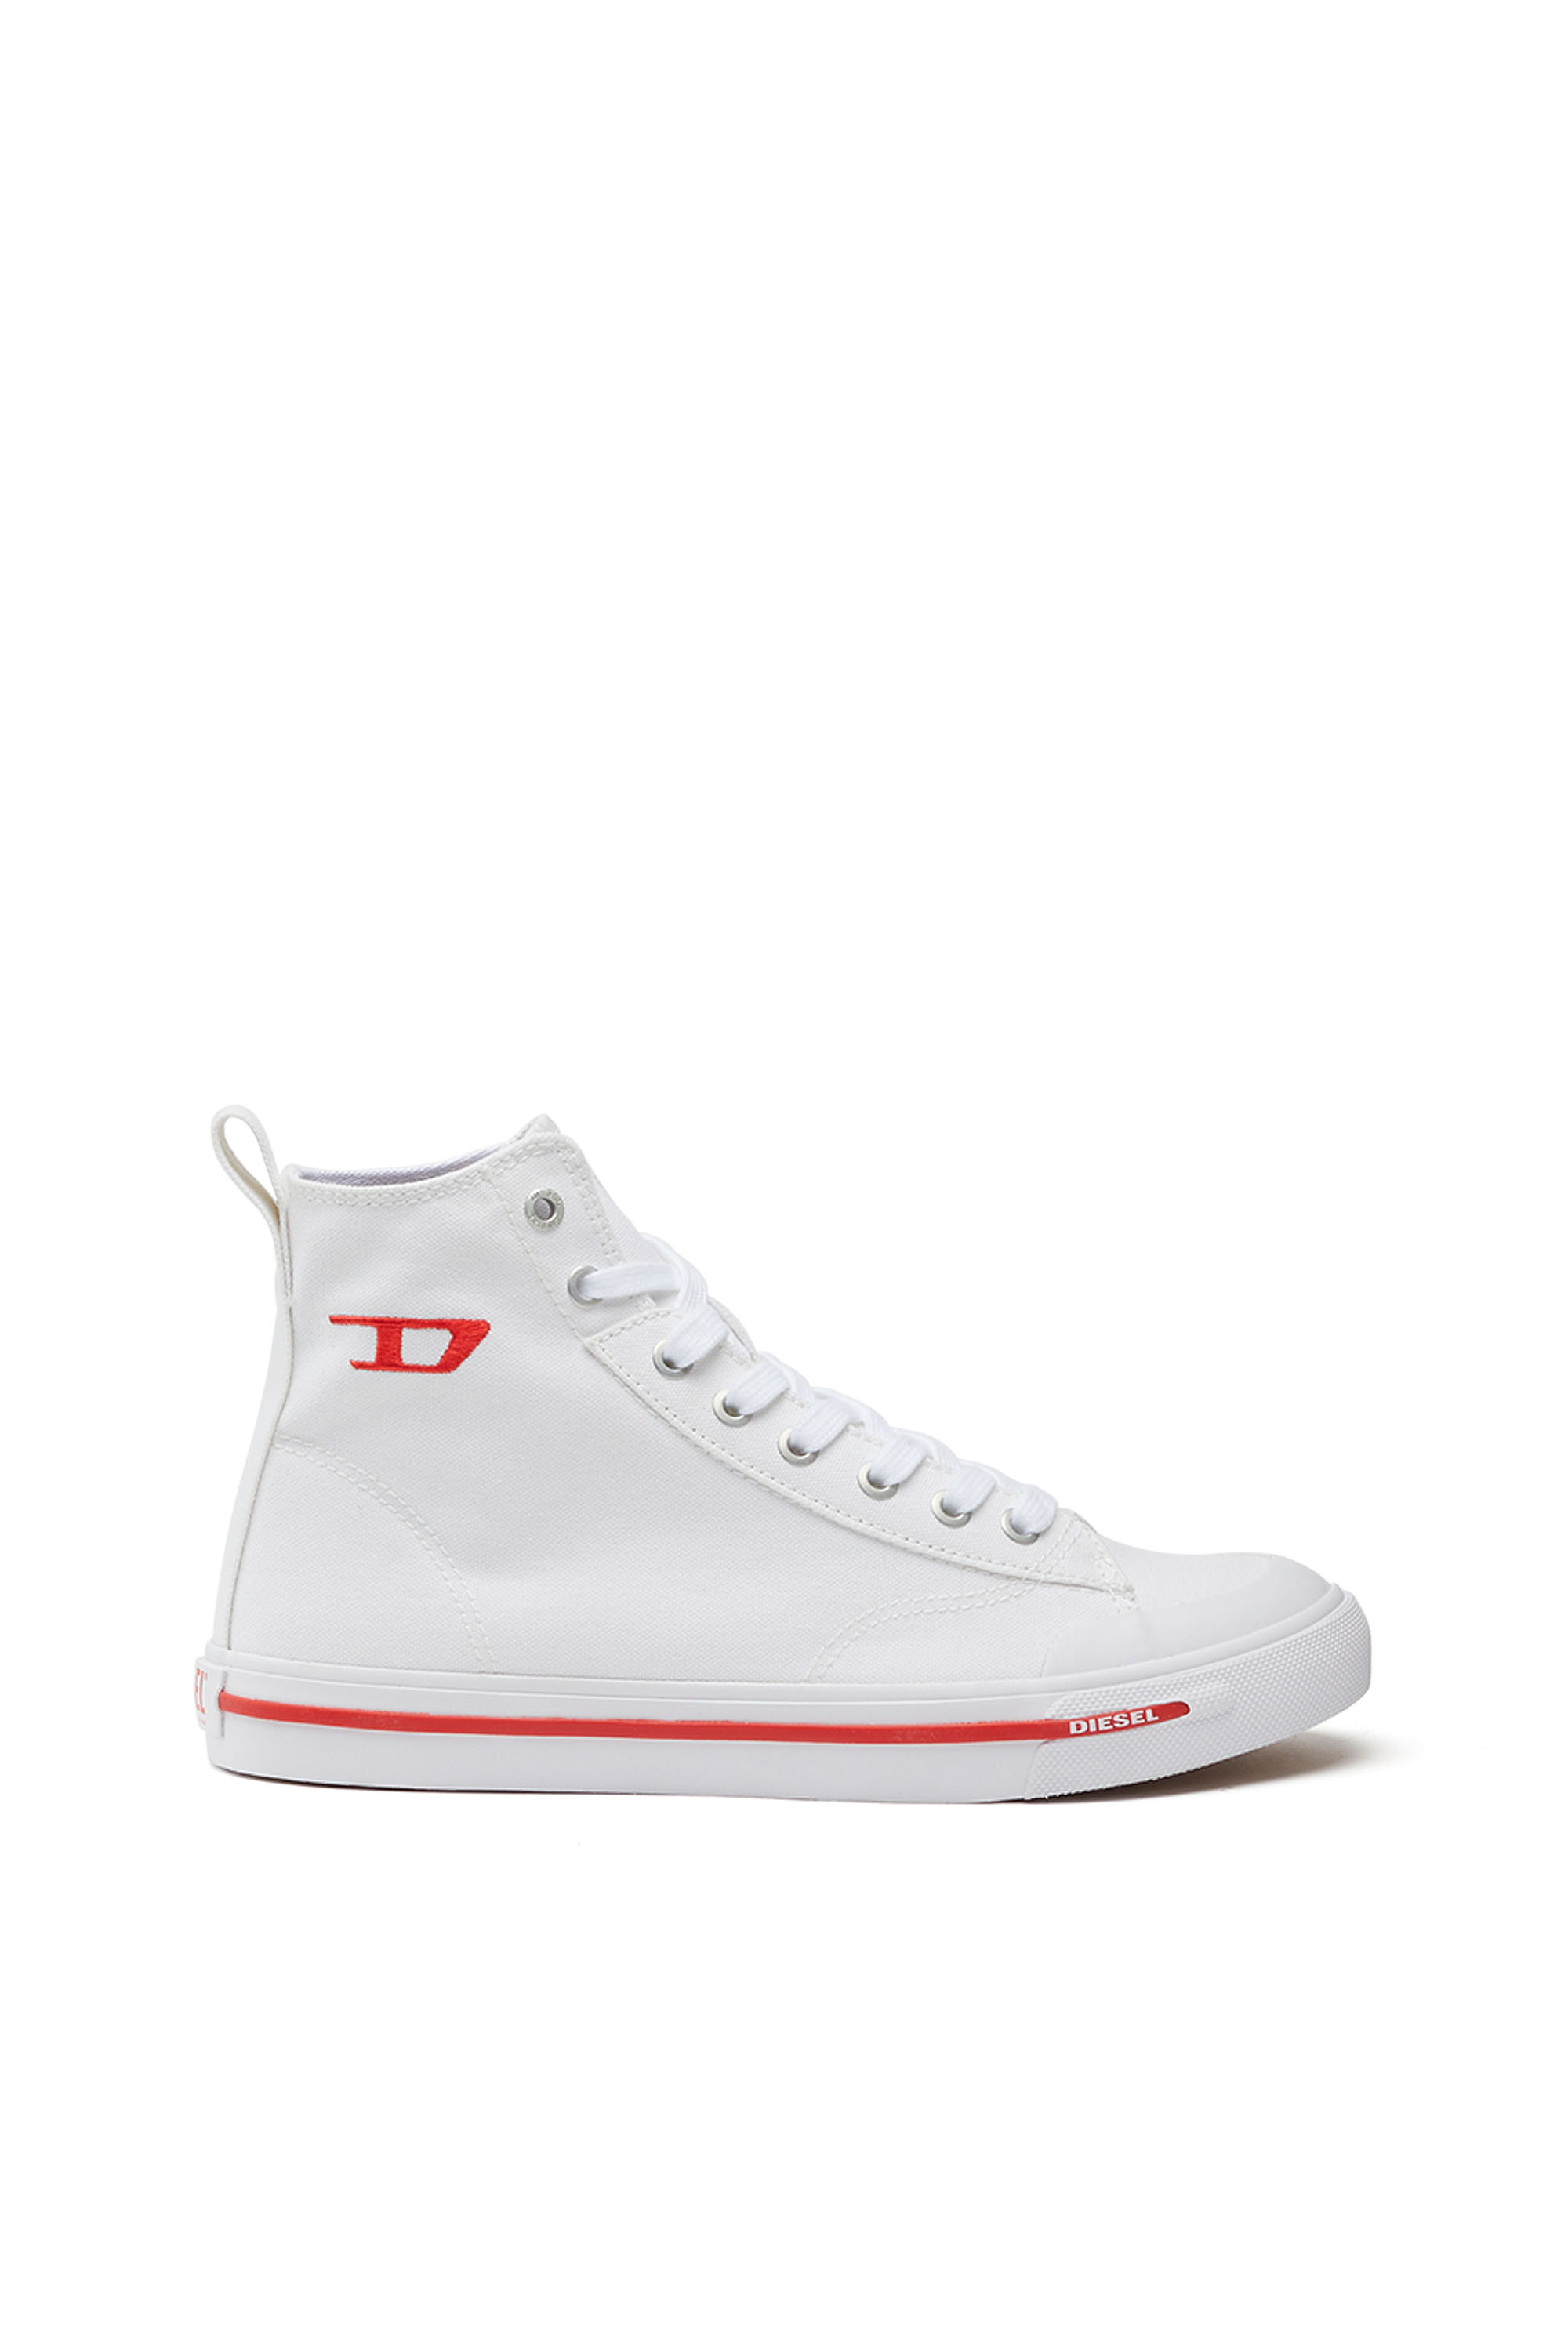 Diesel - Sneaker alte in tela con patch ovale - Sneakers - Donna - Bianco